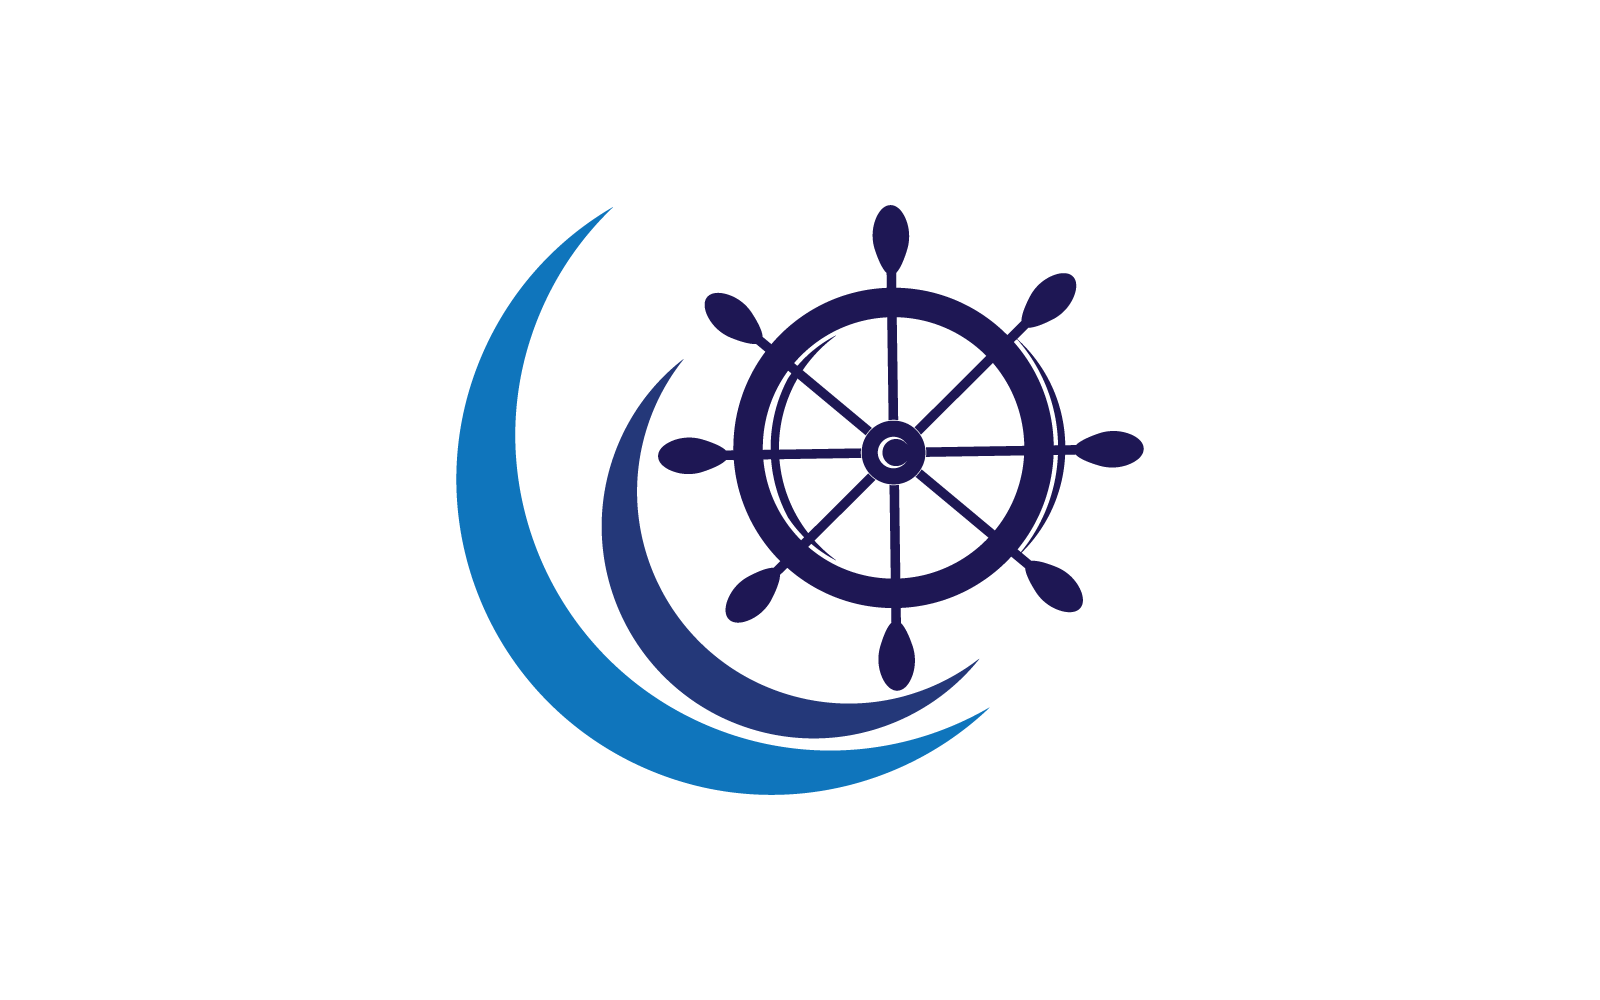 Schiffsrad-Logo-Symbol-Illustrationsvektorvorlage